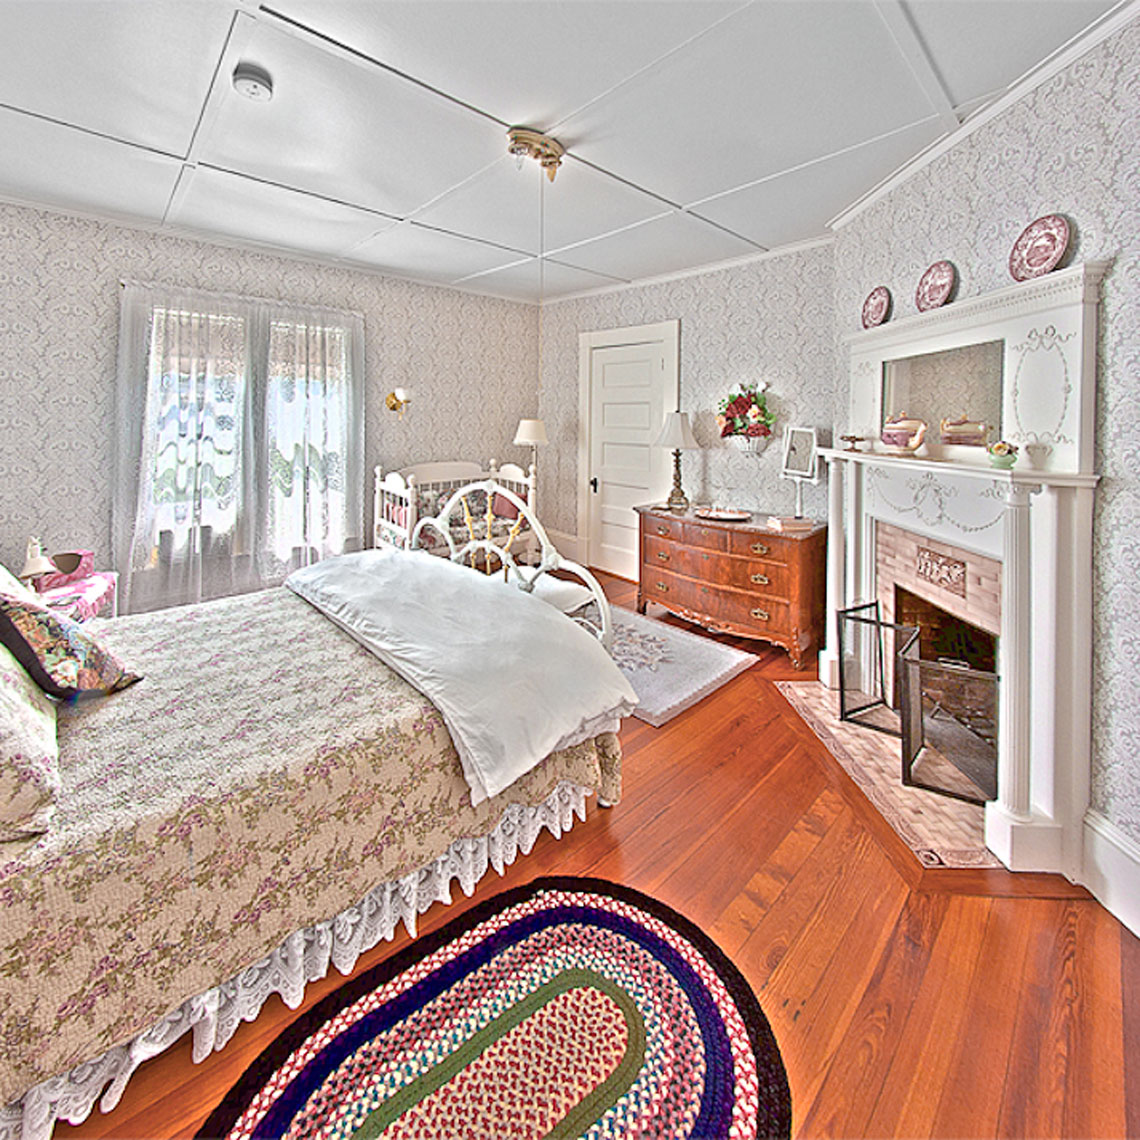 tourmaline room bed, fireplace, and hardwood floors